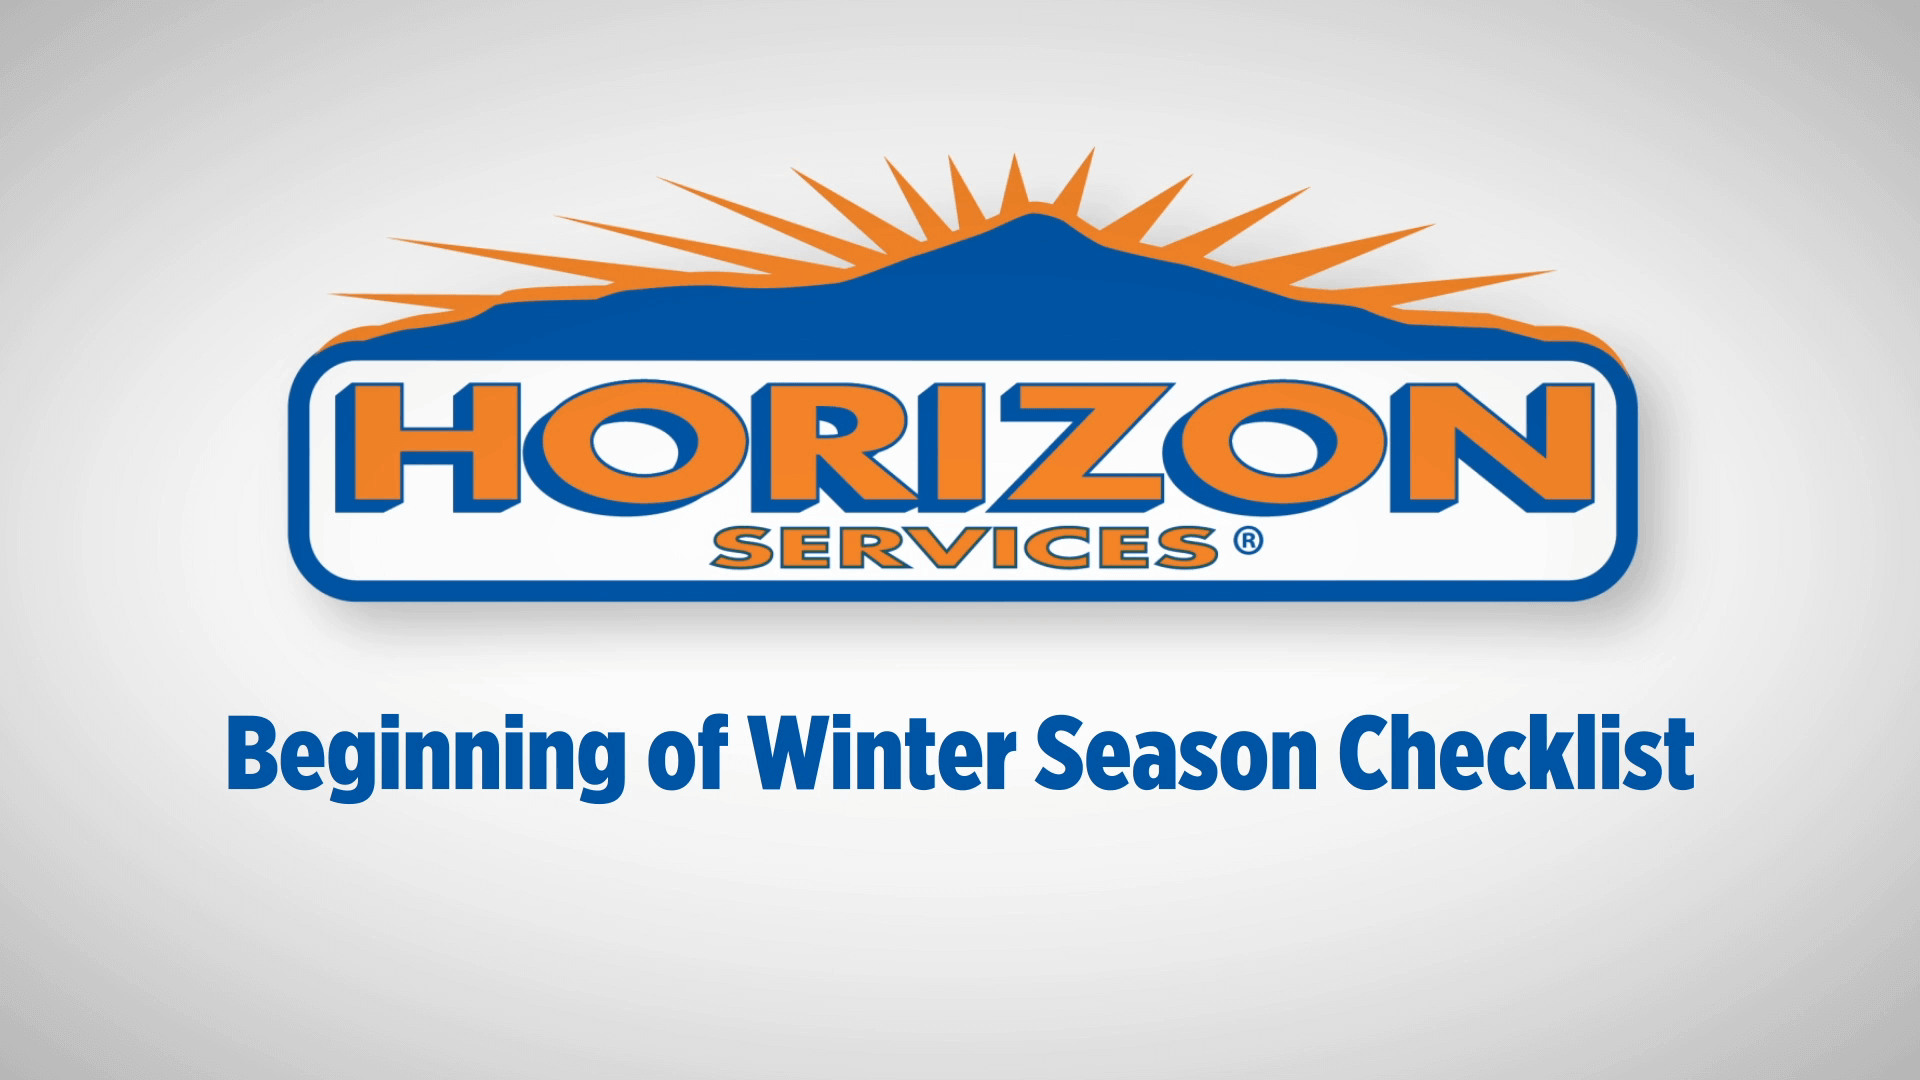 Horizon Services logo with beginning of winter season checklist text